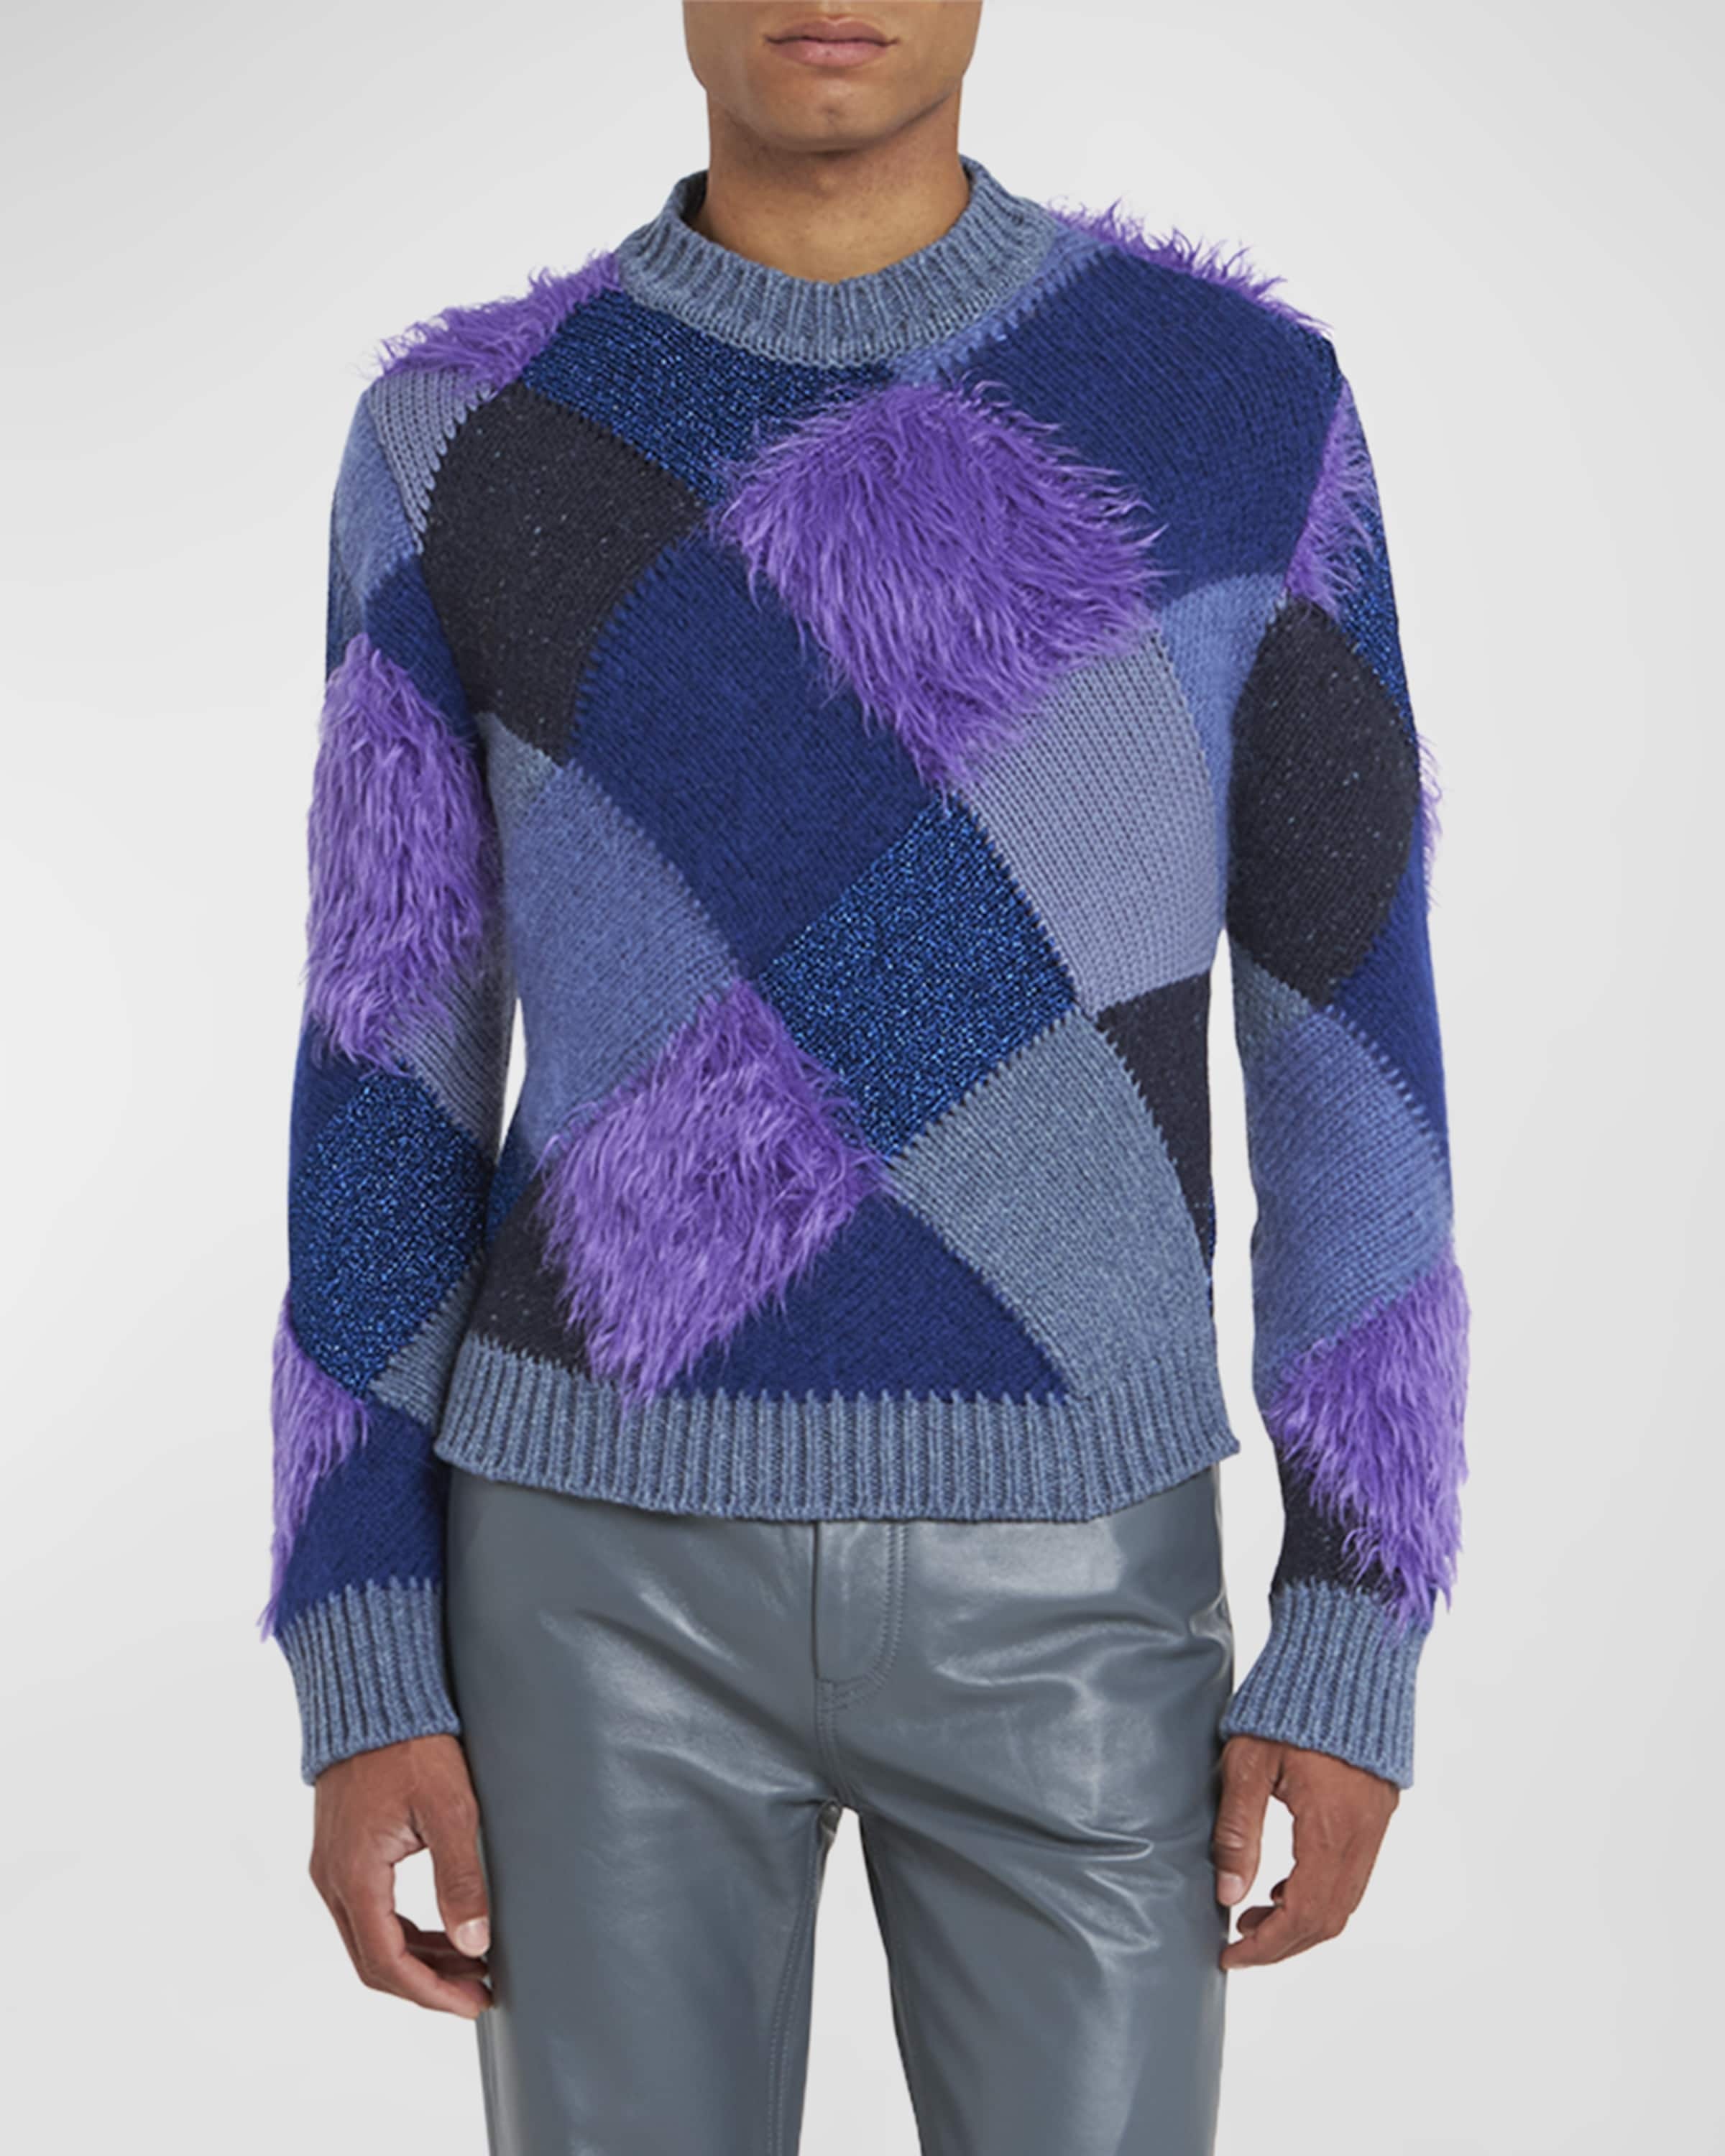 Men's 3D Intarsia Block Sweater - 2